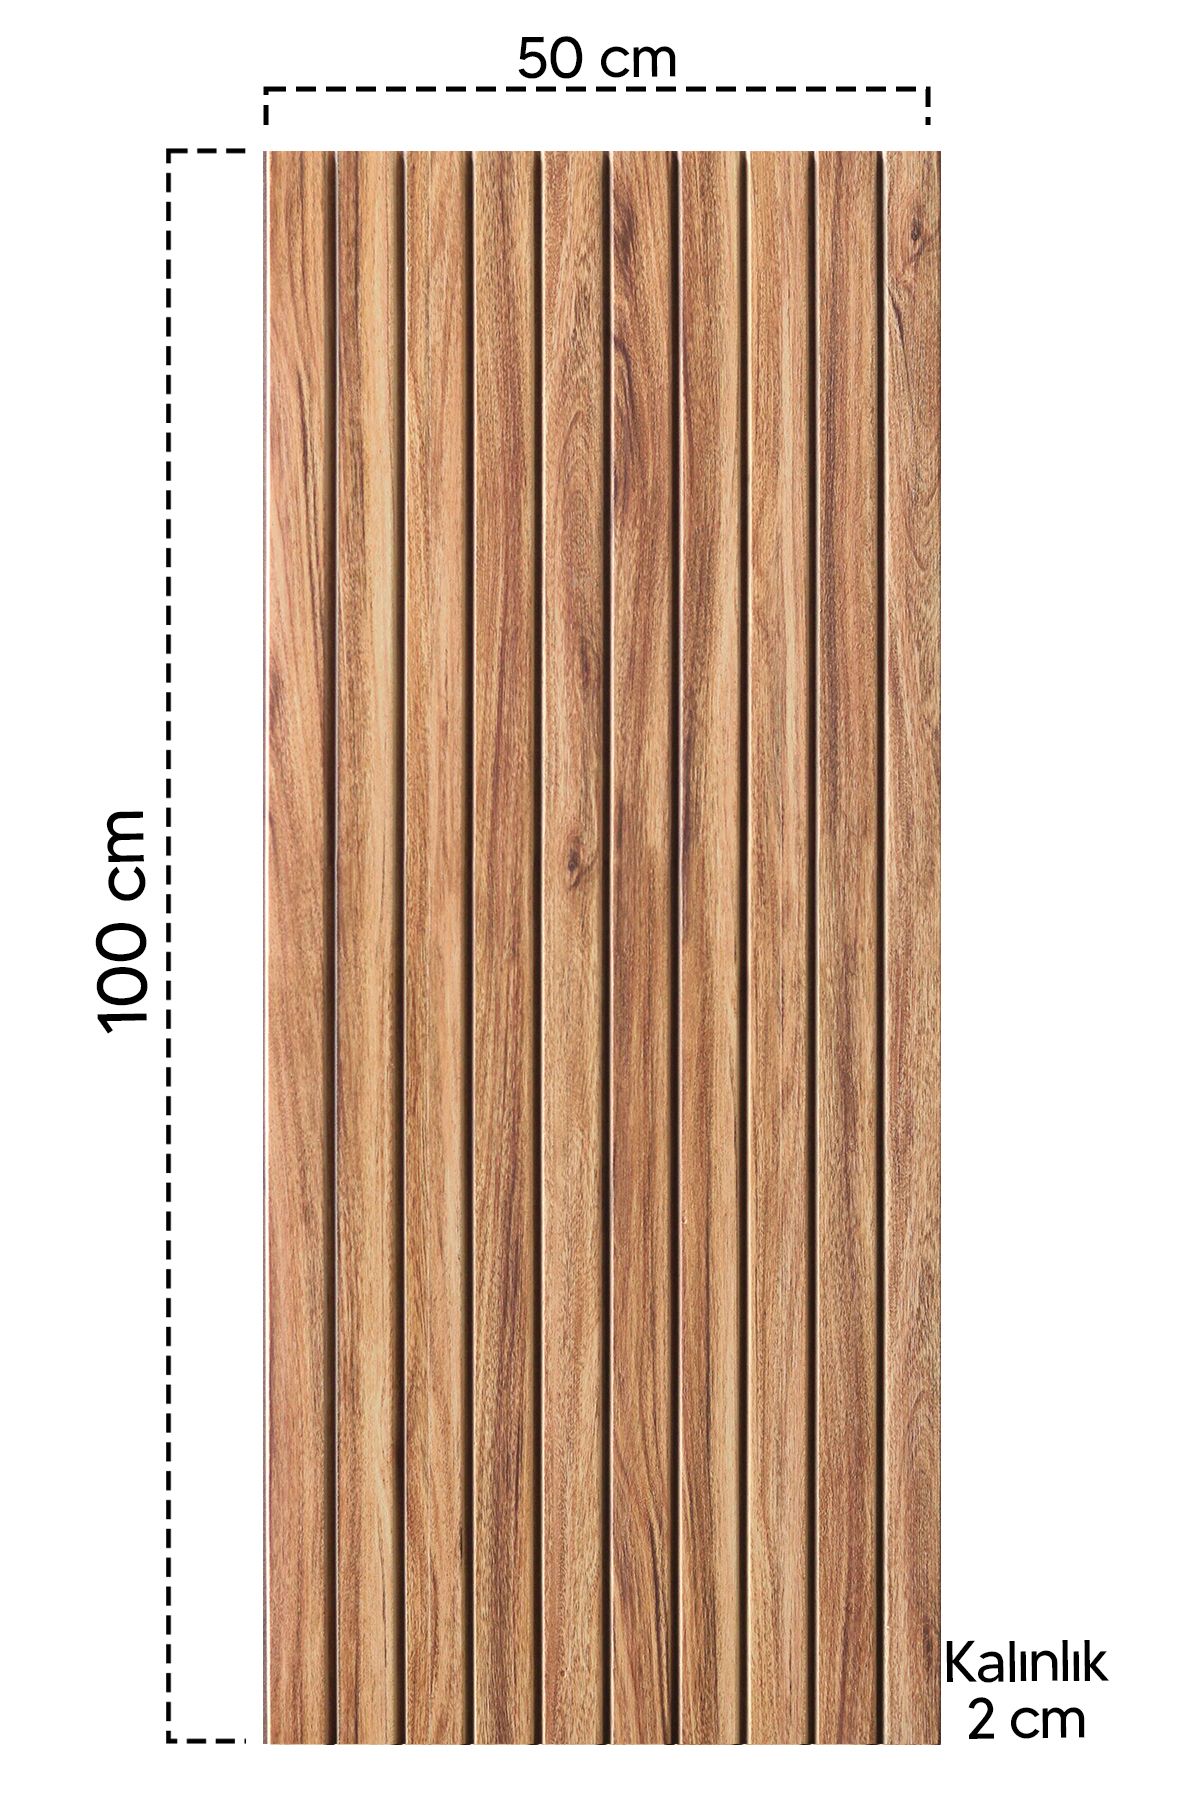 Stikwall Ahşap Görünümlü Strafor Duvar Kaplama Paneli 910-202 - 50x100